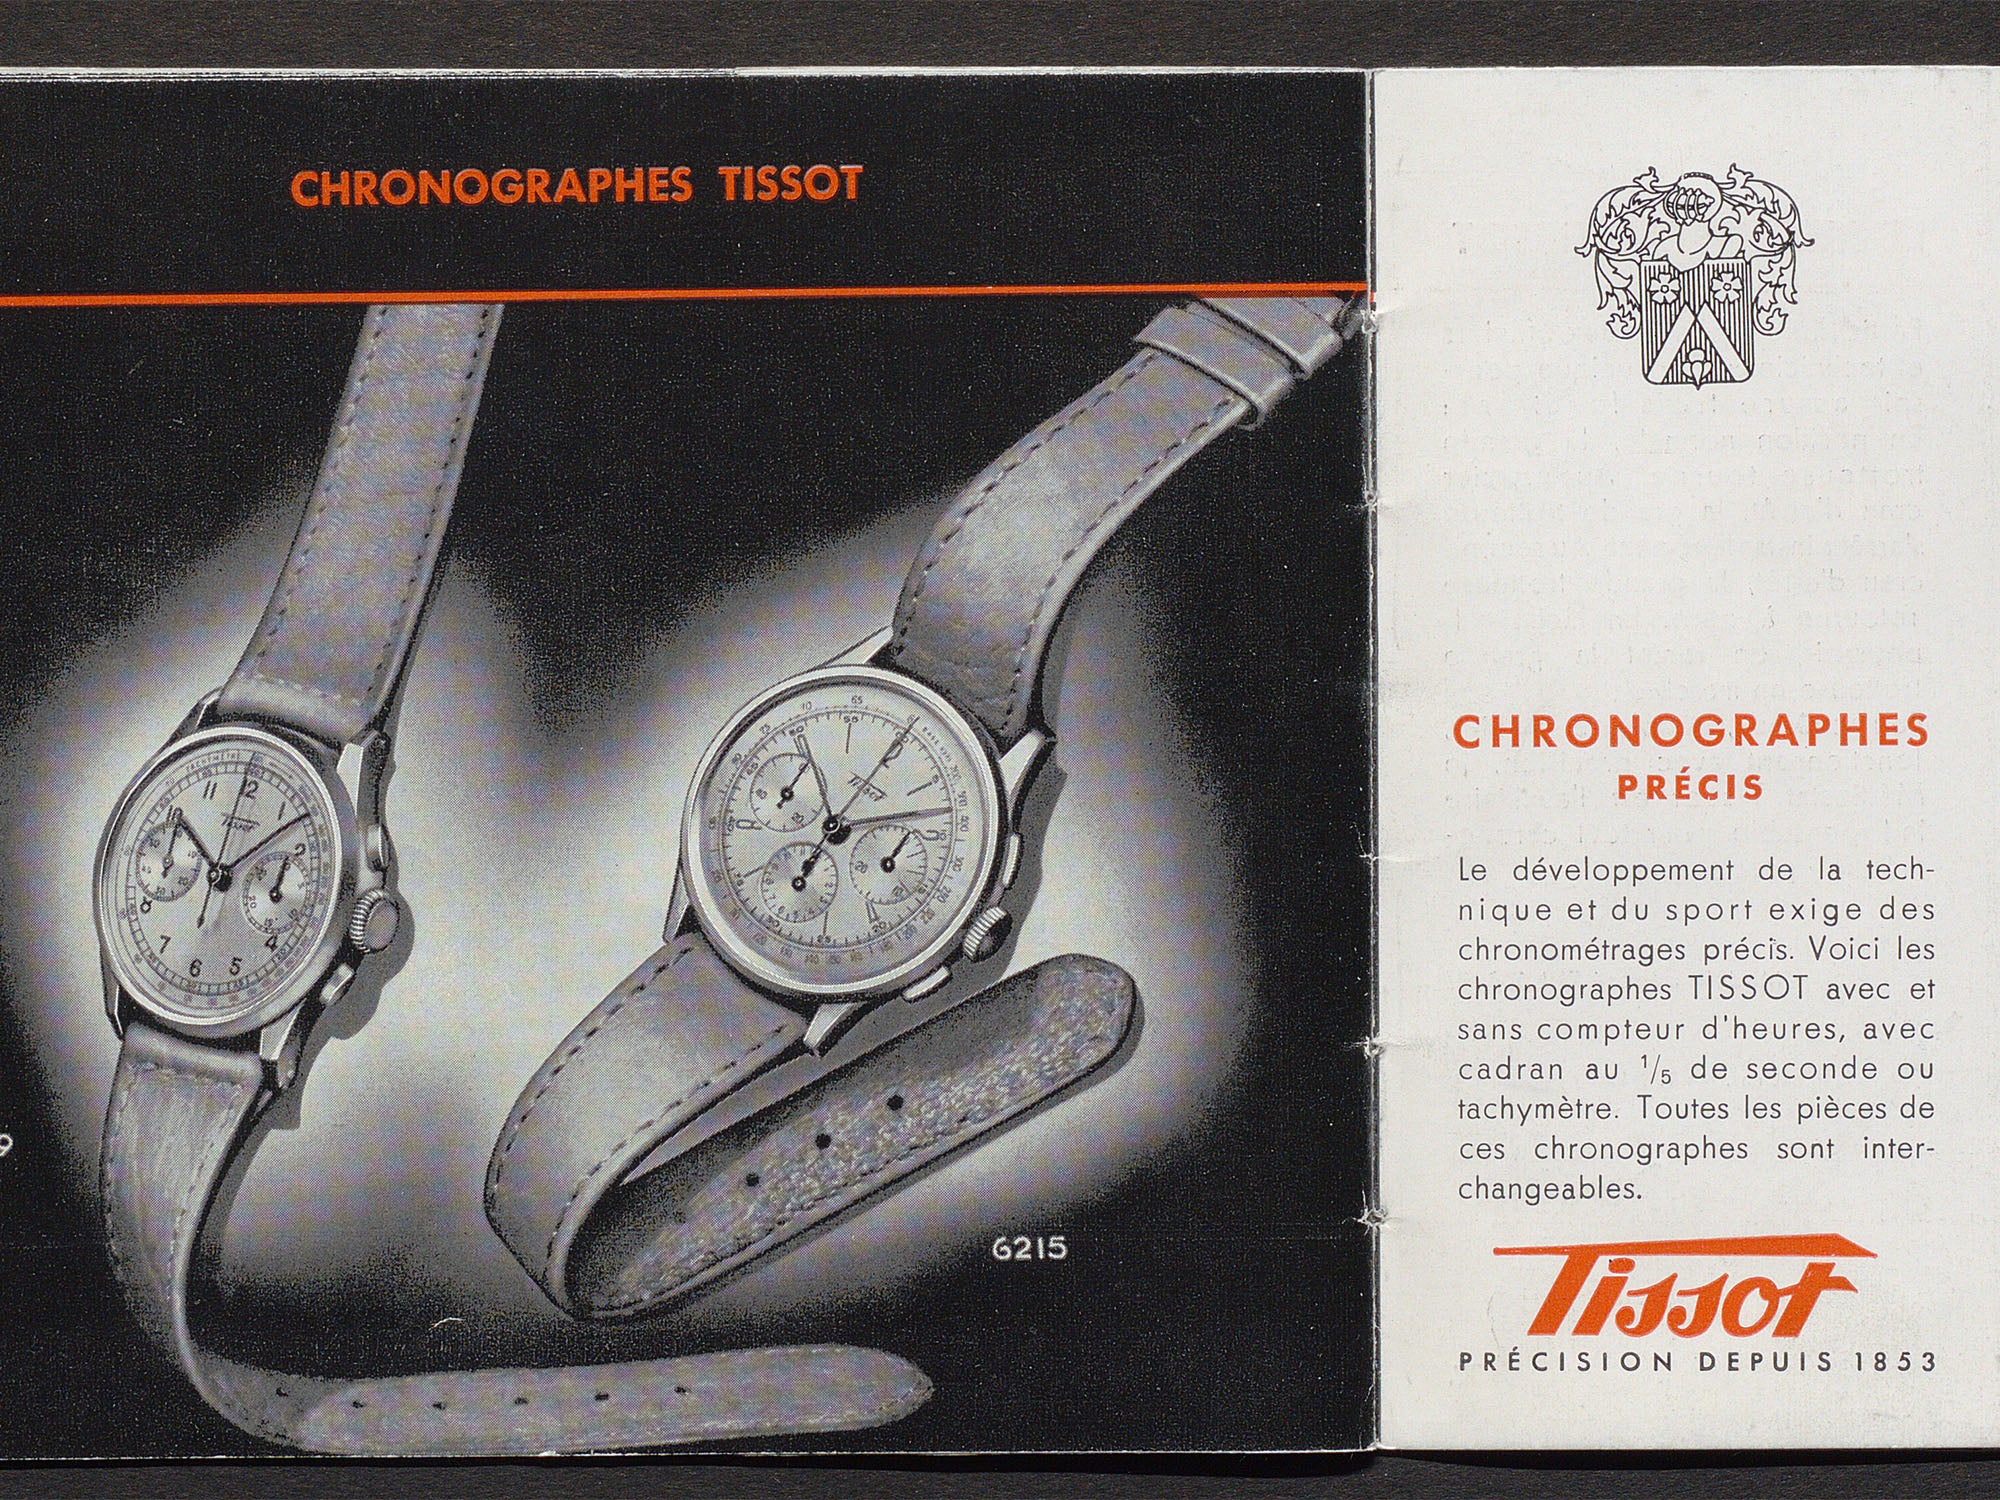 Tissot Chronographe vintage advertisement